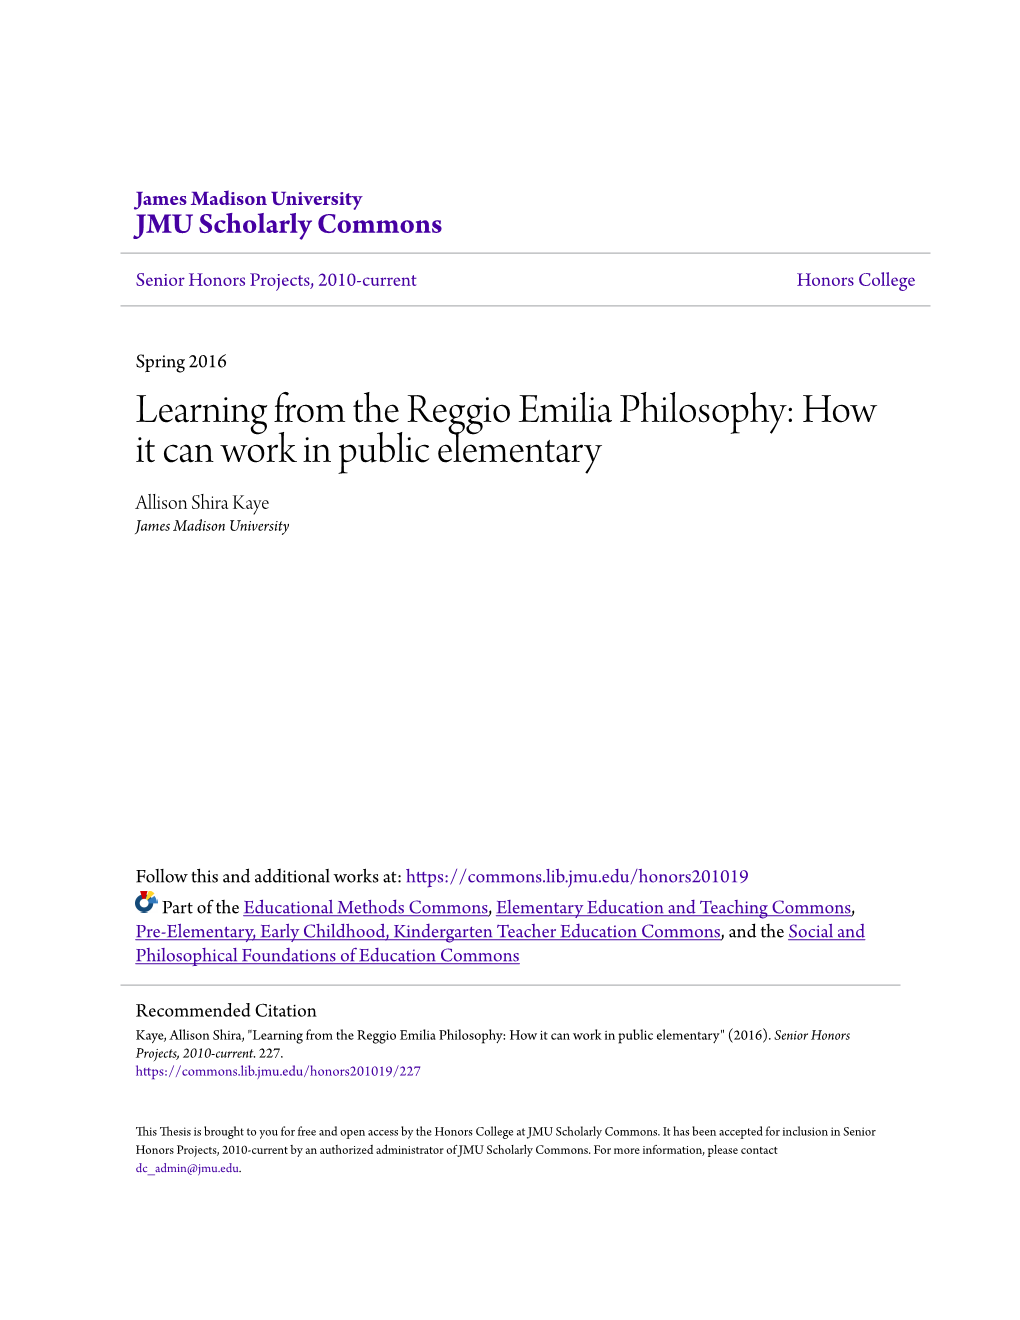 Learning from the Reggio Emilia Philosophy: How It Can Work in Public Elementary Allison Shira Kaye James Madison University